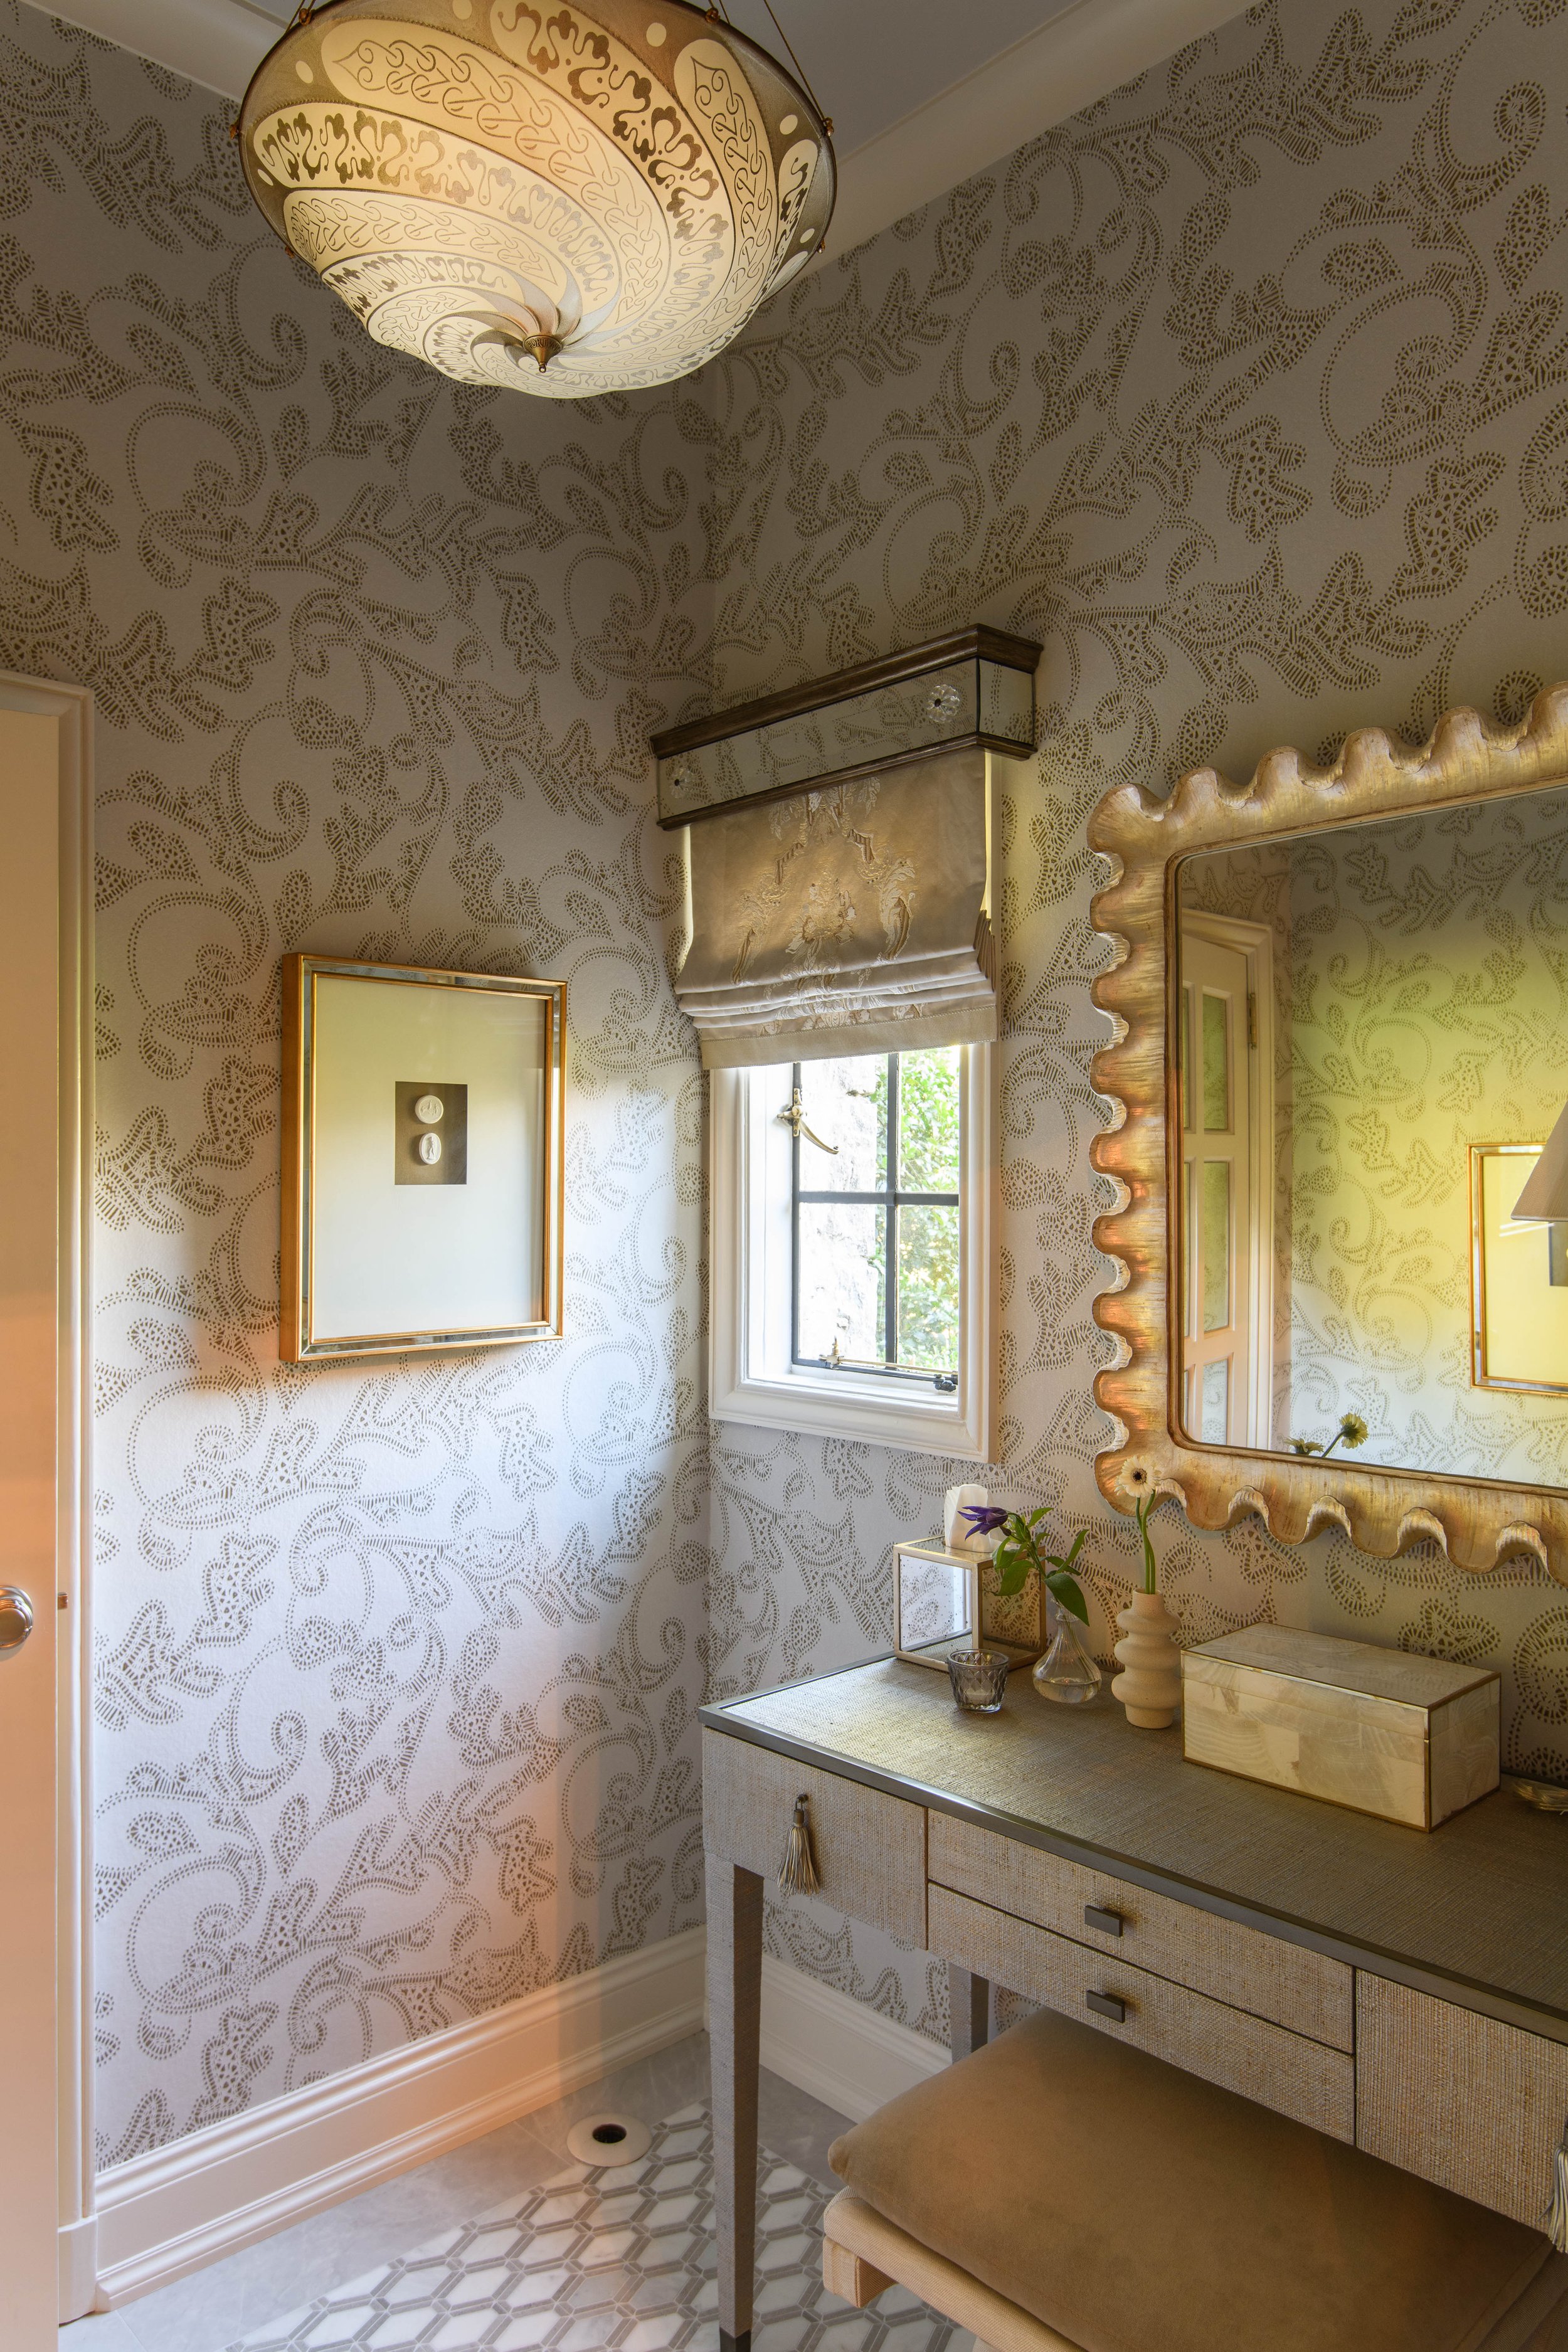 20-patterned-walls-gold-details-vanity-interesting-mirror-light-fixture-westechester-rinfret-interior-designs.jpg